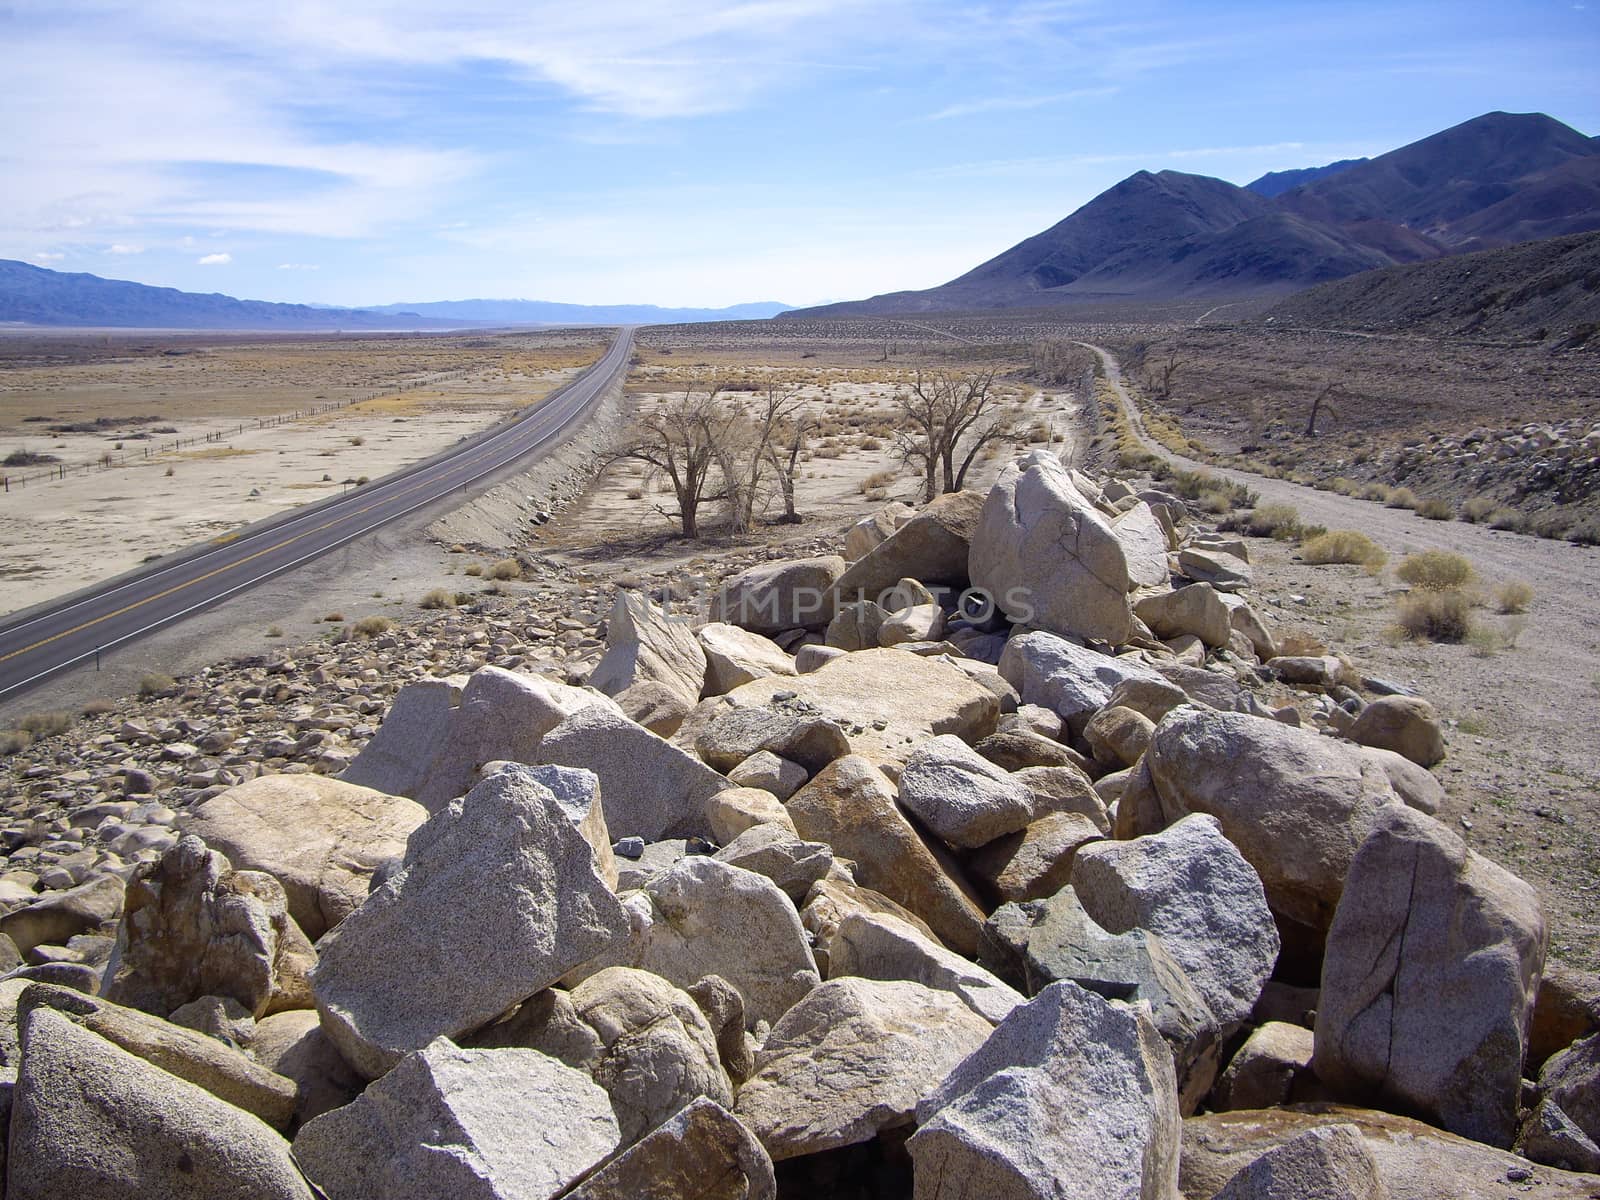 The Long Road Home through Eastern Sierra Nevada by emattil